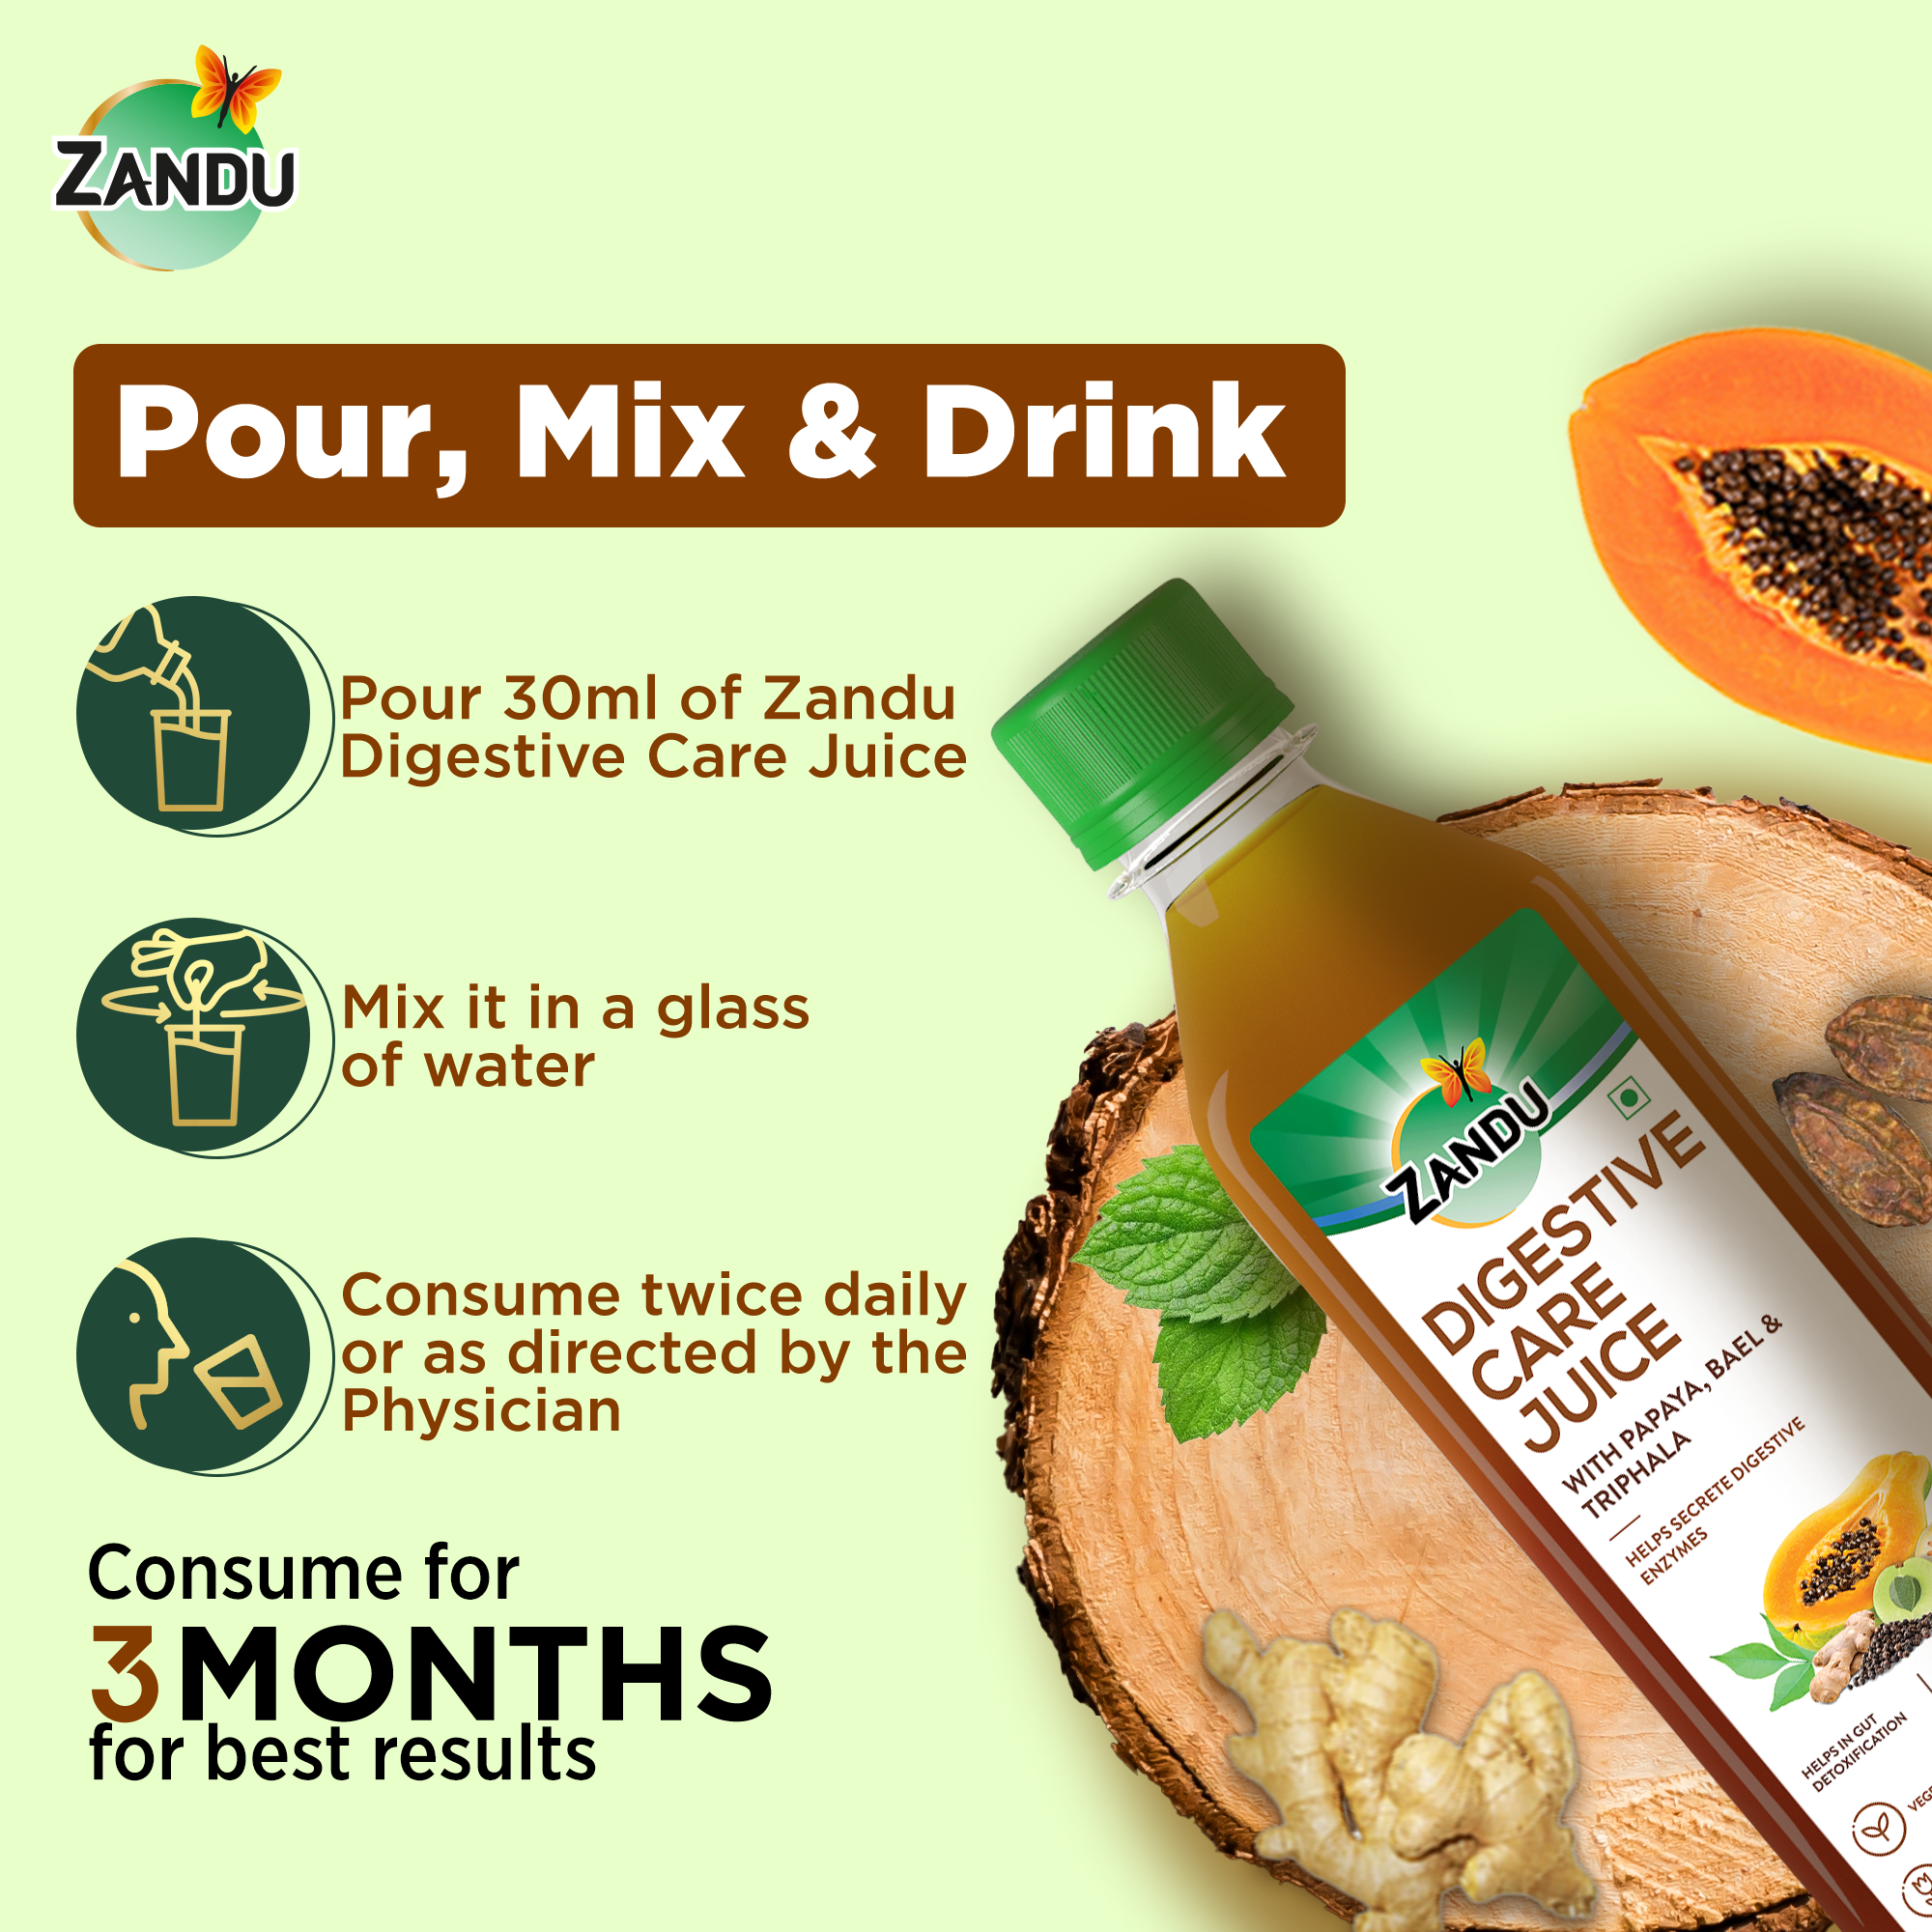 How to consume Zandu Digestive Juice